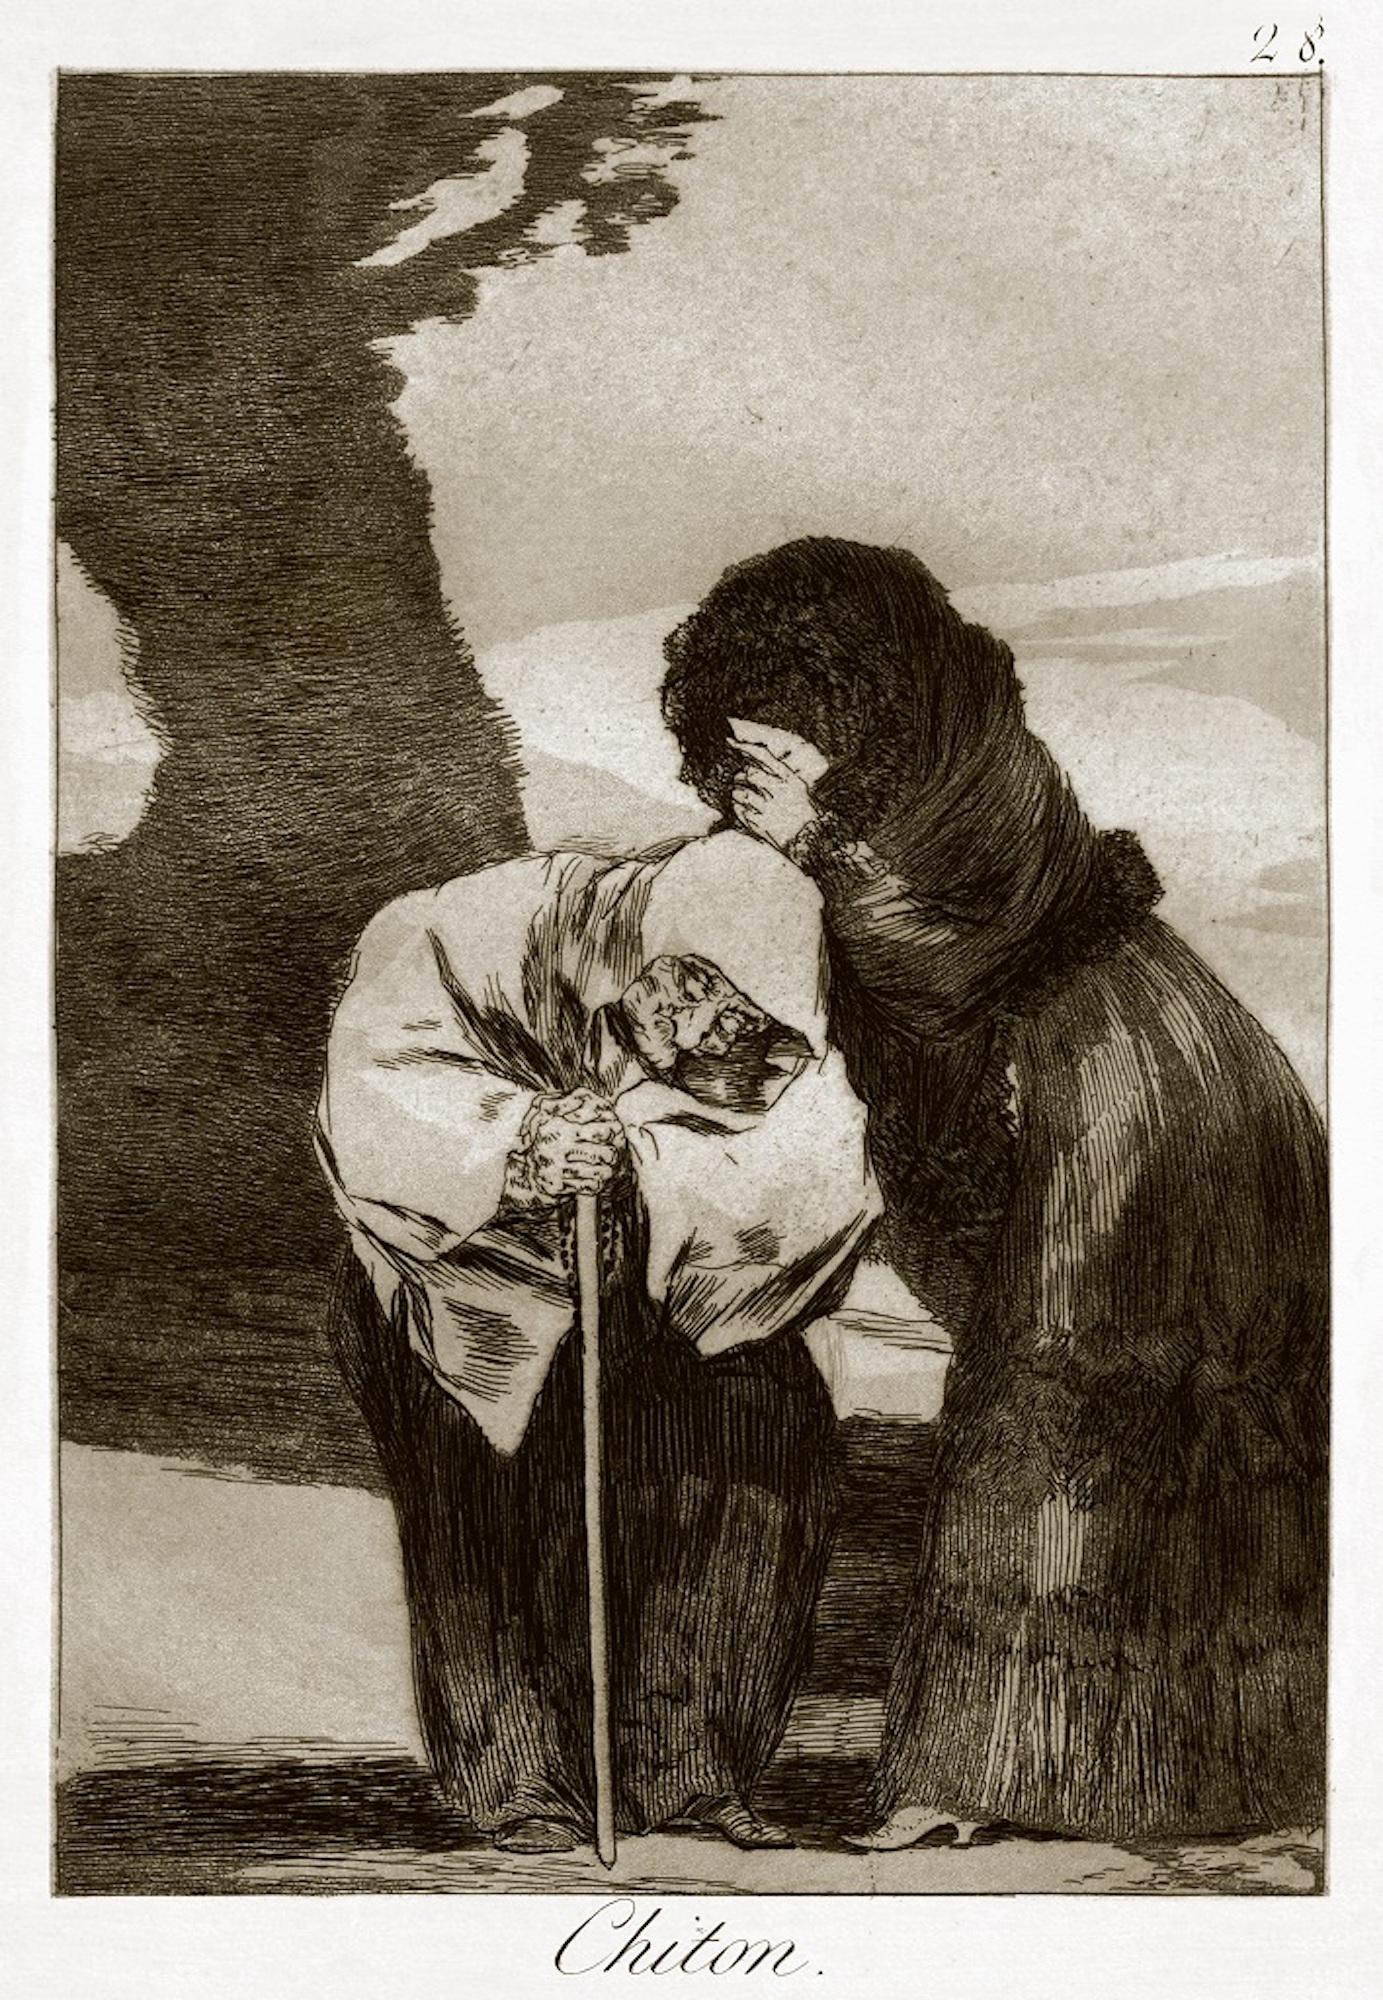 Chiton  - Etching by Francisco Goya - 1868